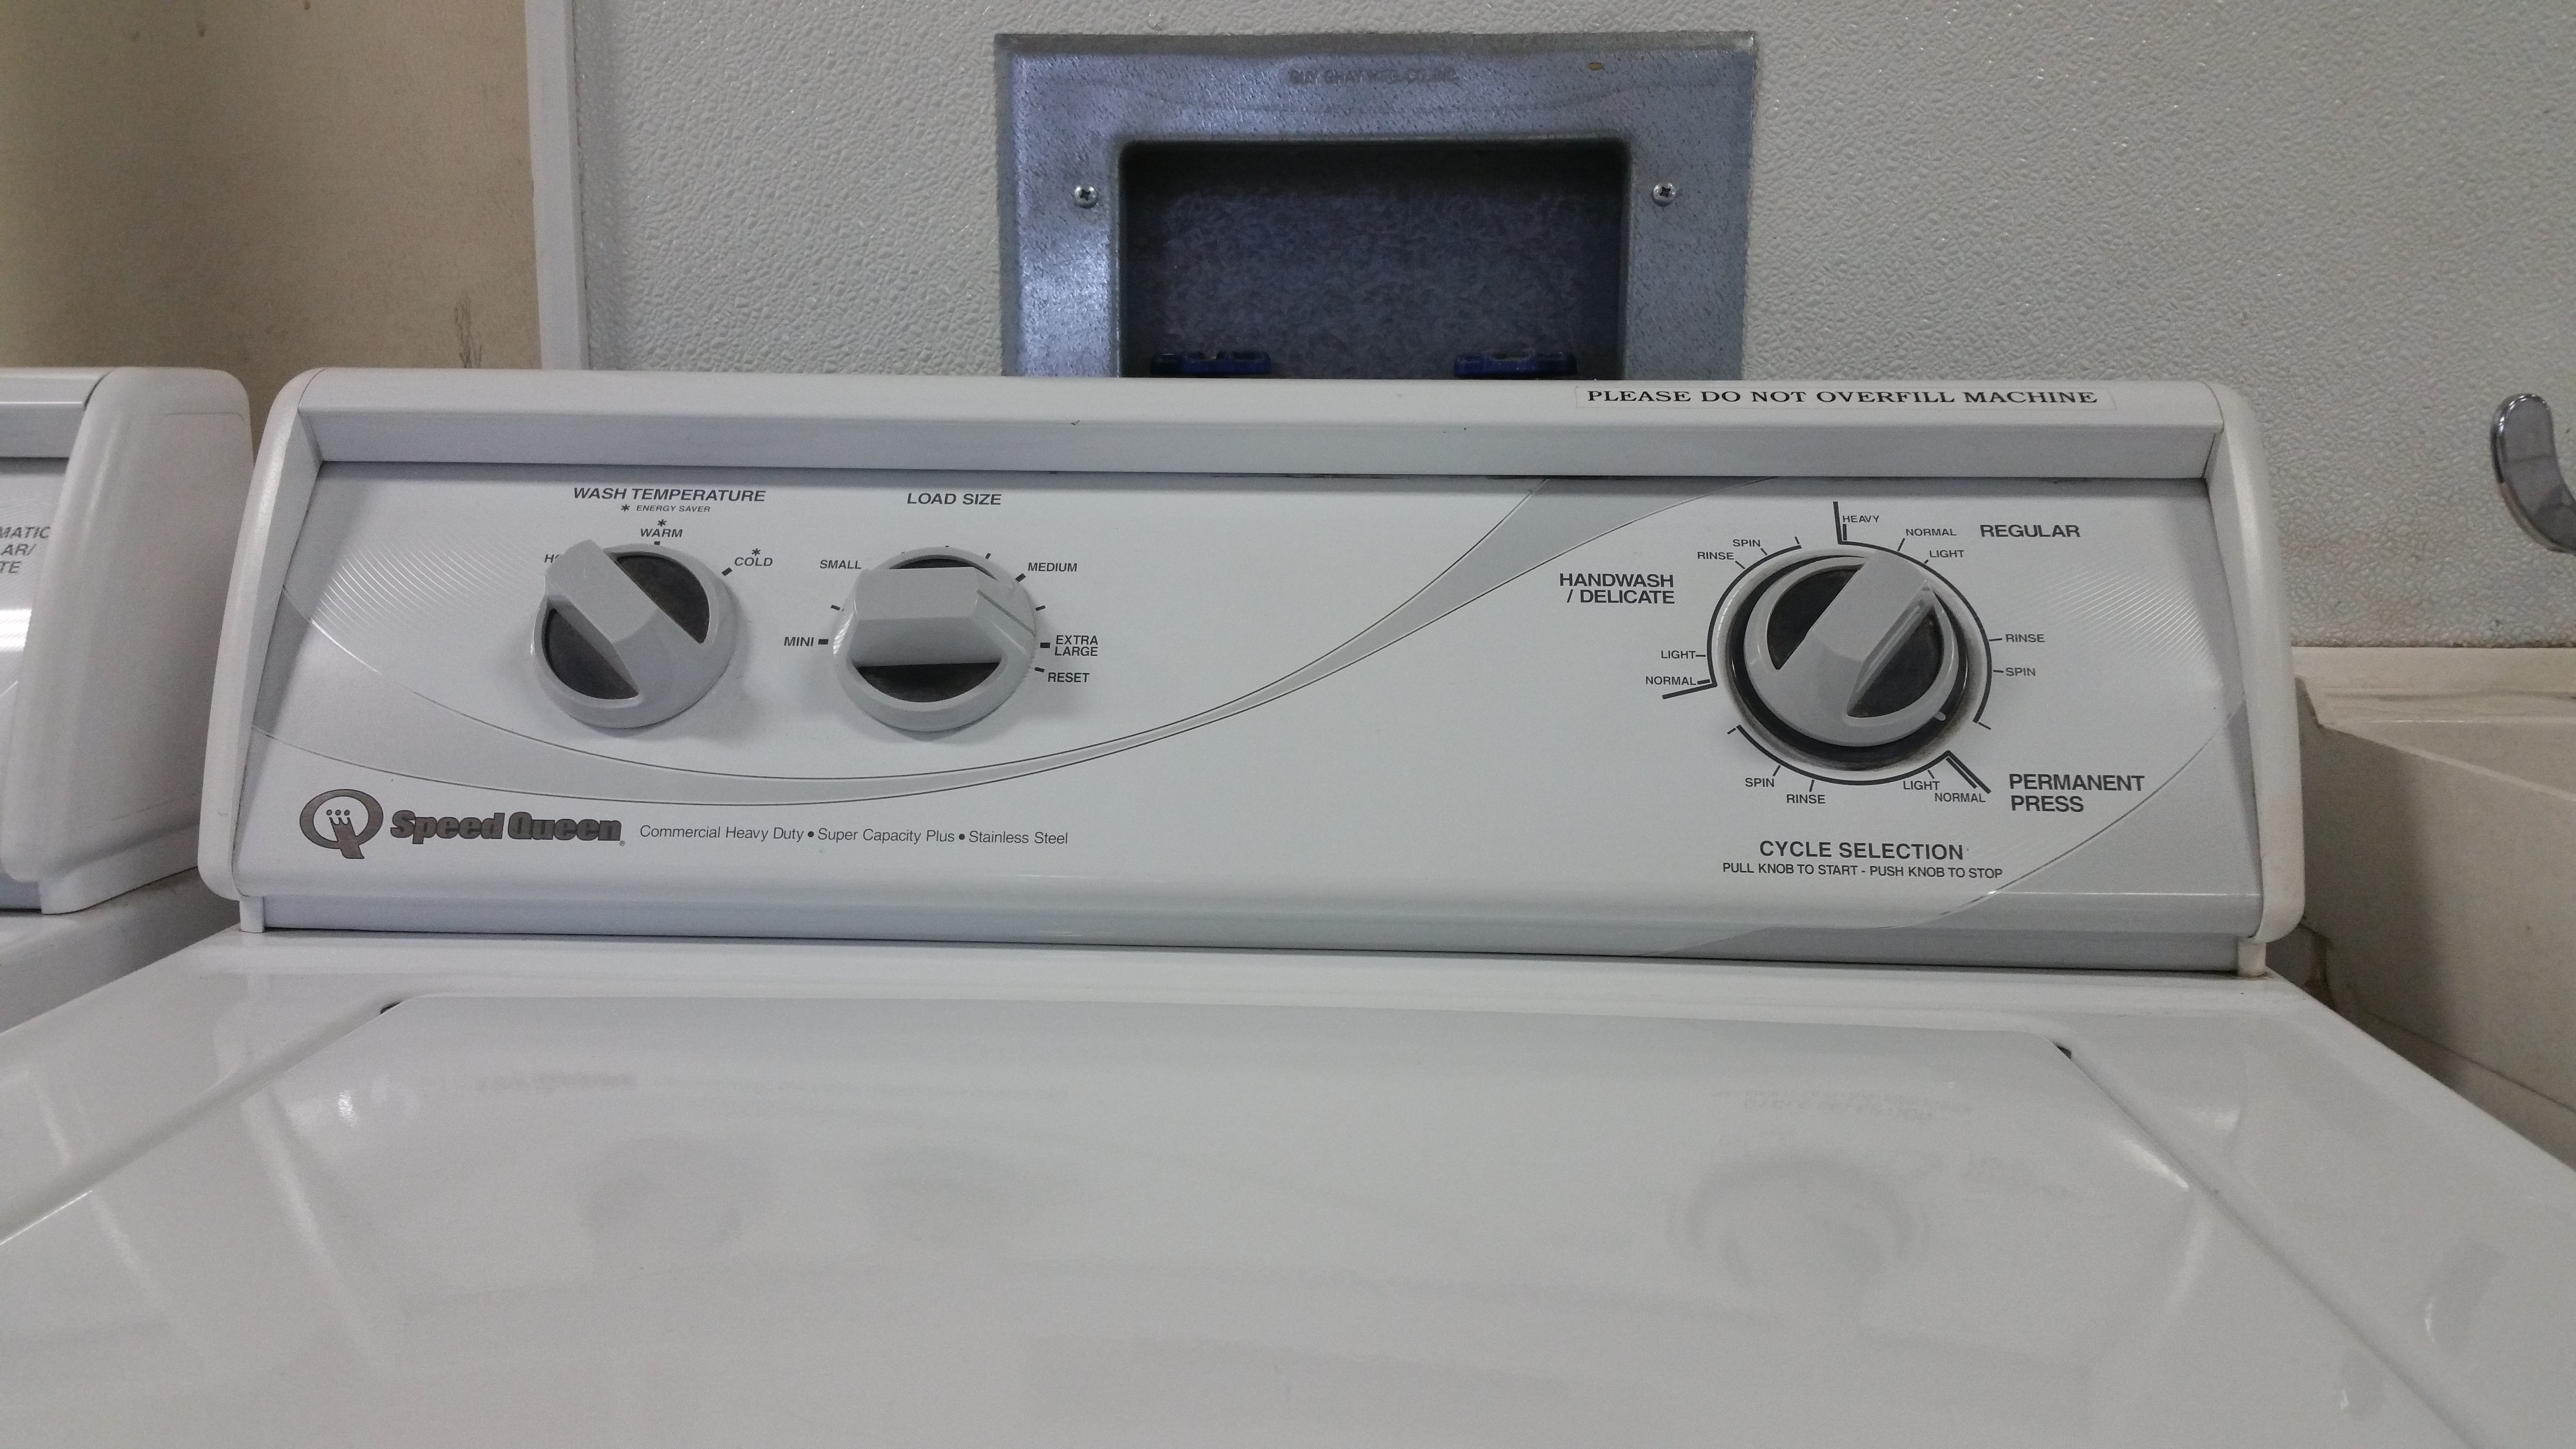 control panels on a white washing machine